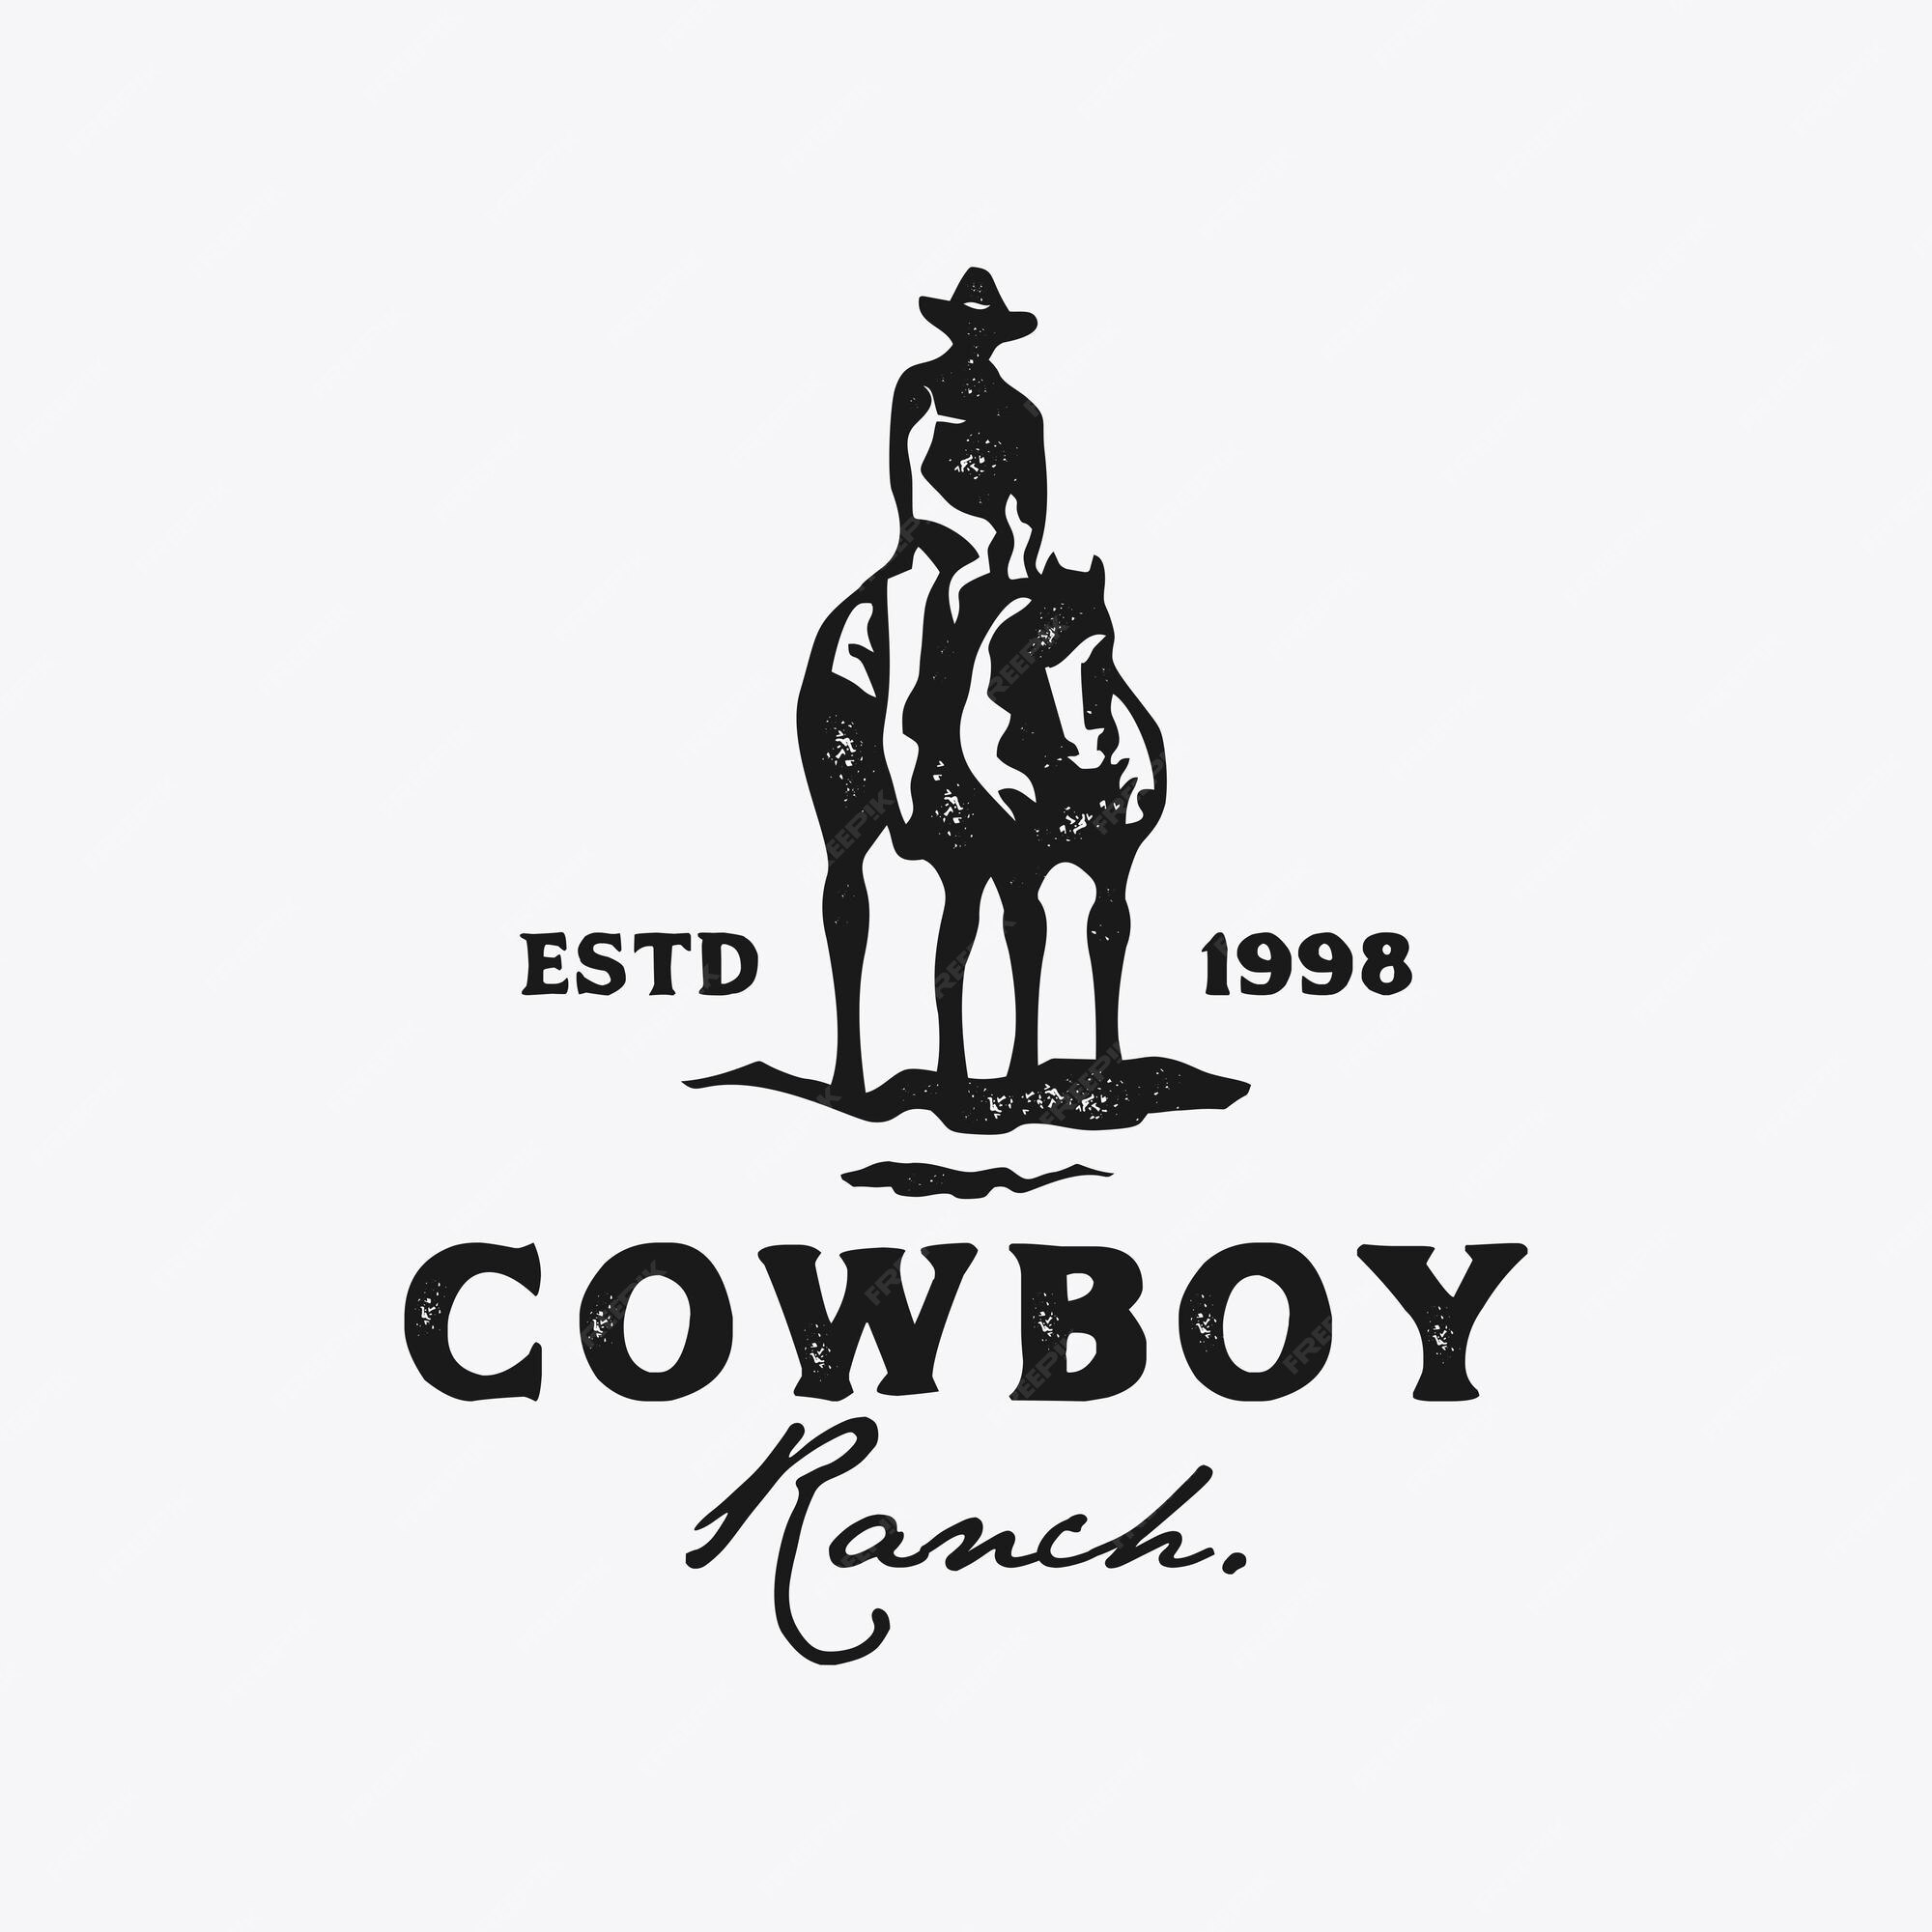 Premium Vector | Cowboy riding horse silhouette logo design illustration